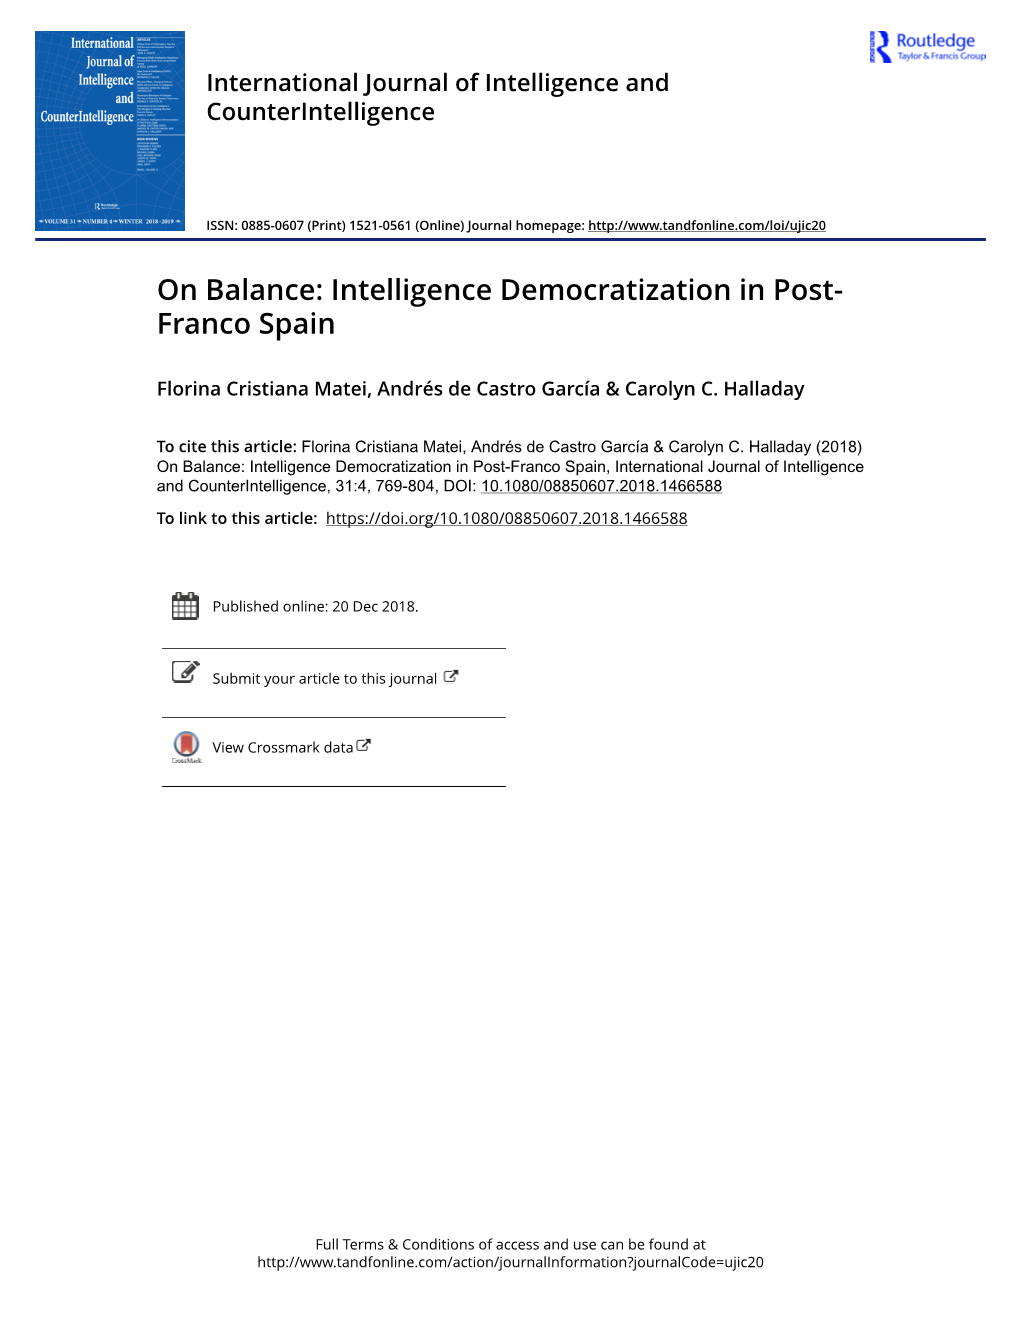 Intelligence Democratization in Post- Franco Spain